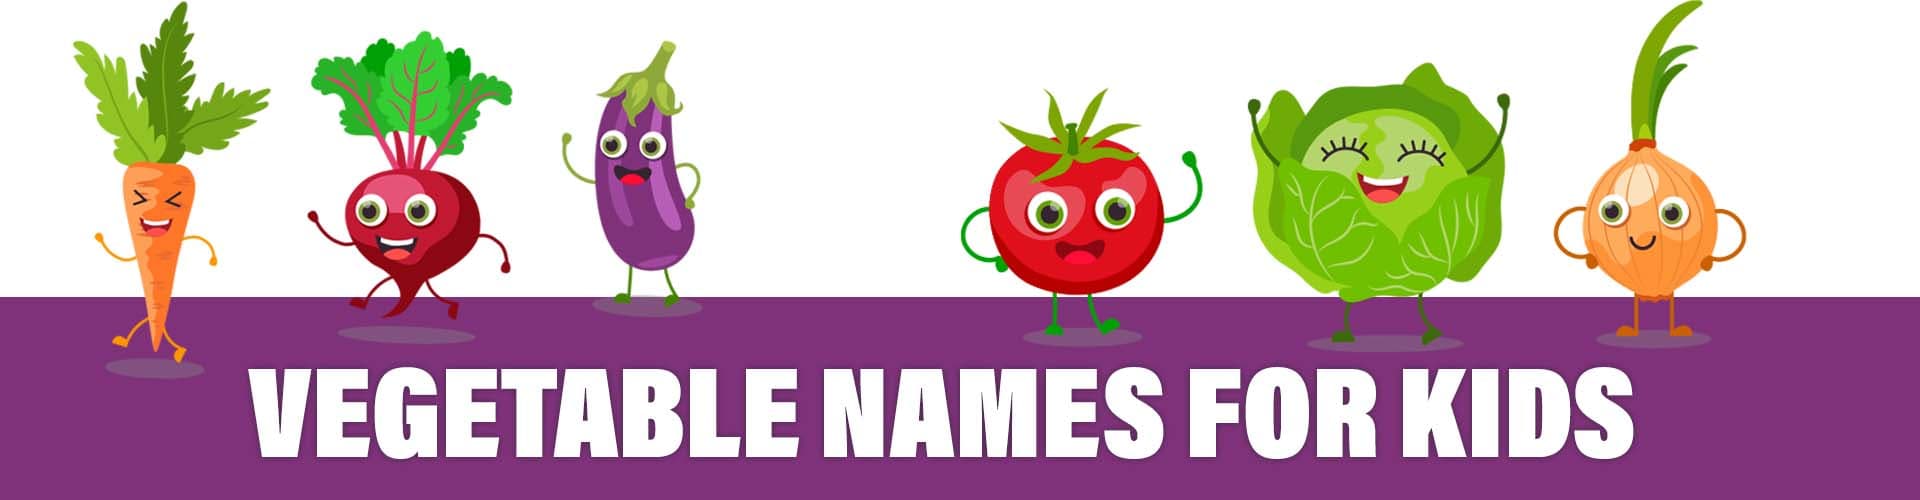 vegetable names